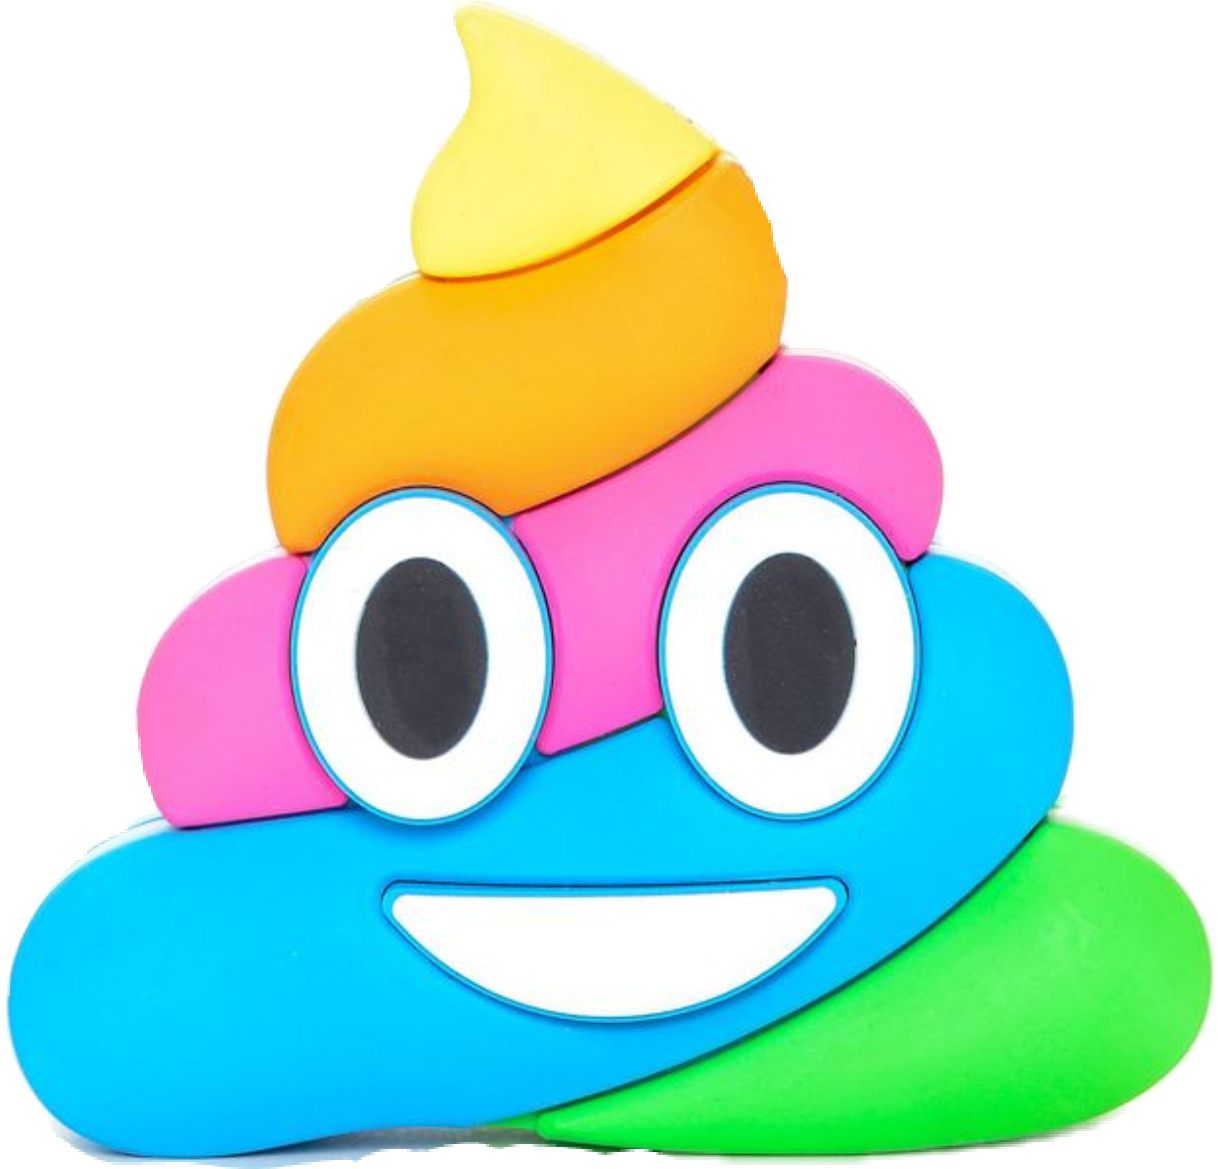 Vector Poop Emoji PNG Transparent Image